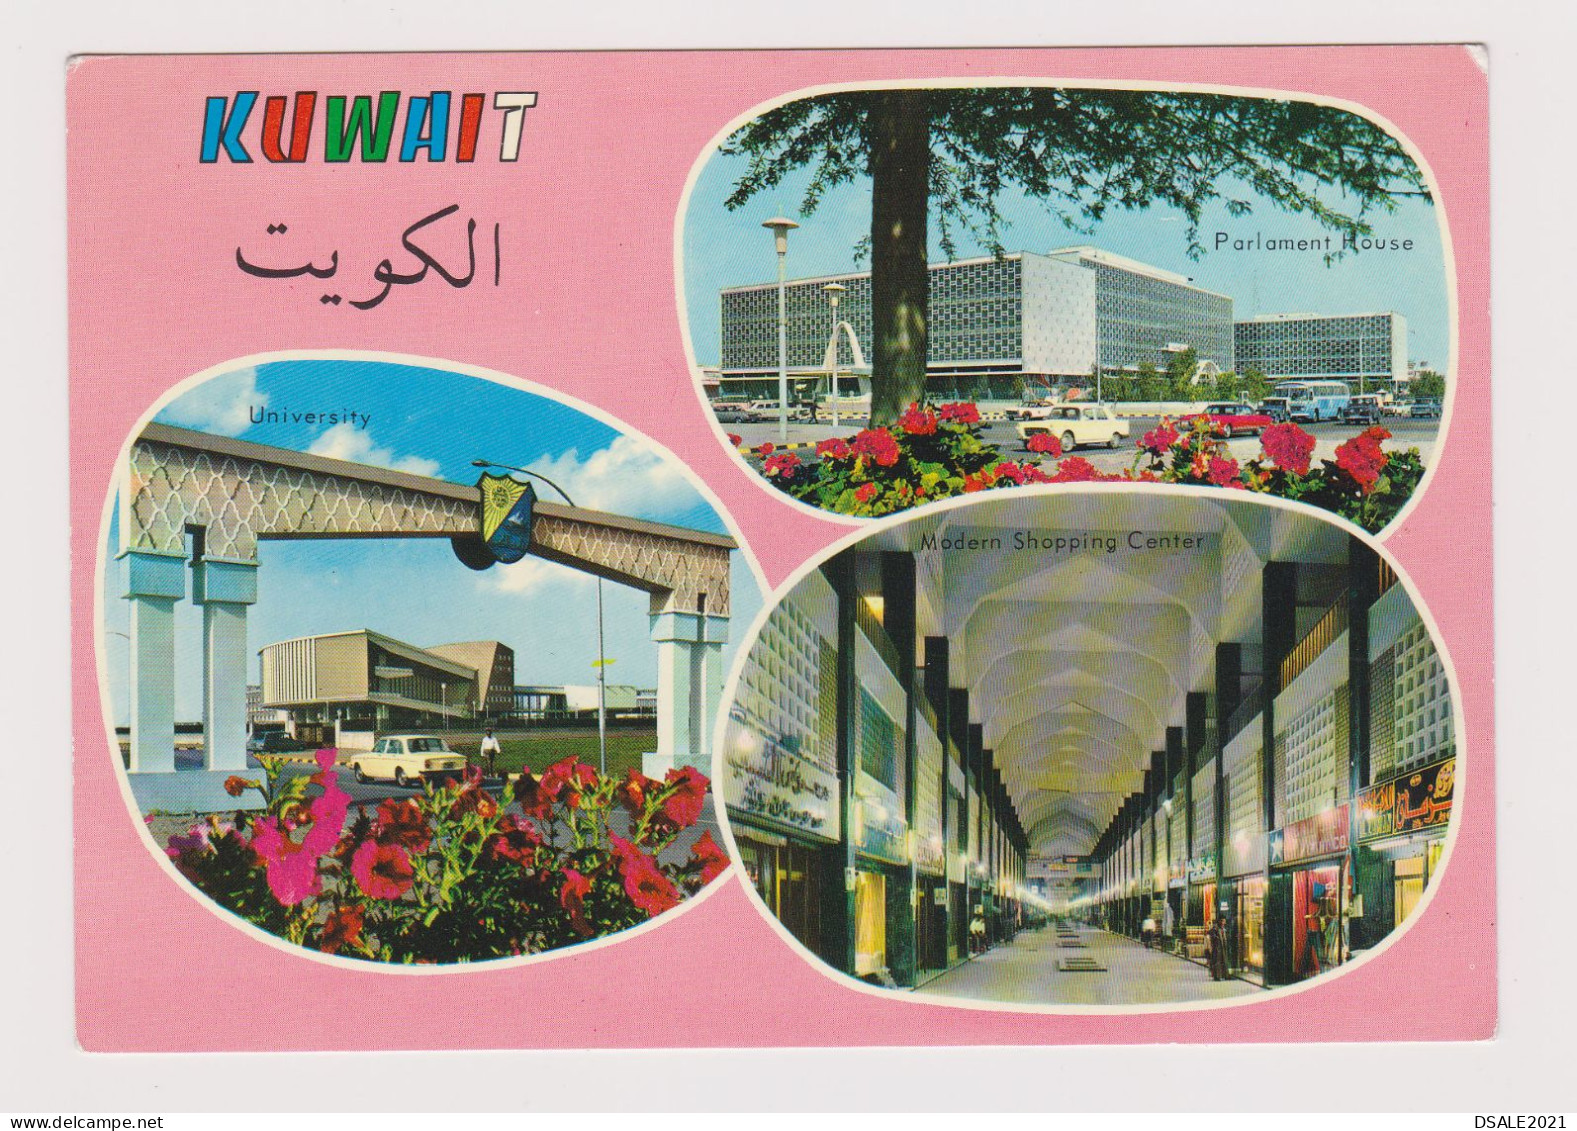 KUWAIT University, Old Car, Parliament House, Shopping Center, View Vintage Photo Postcard RPPc AK (1311) - Koweït